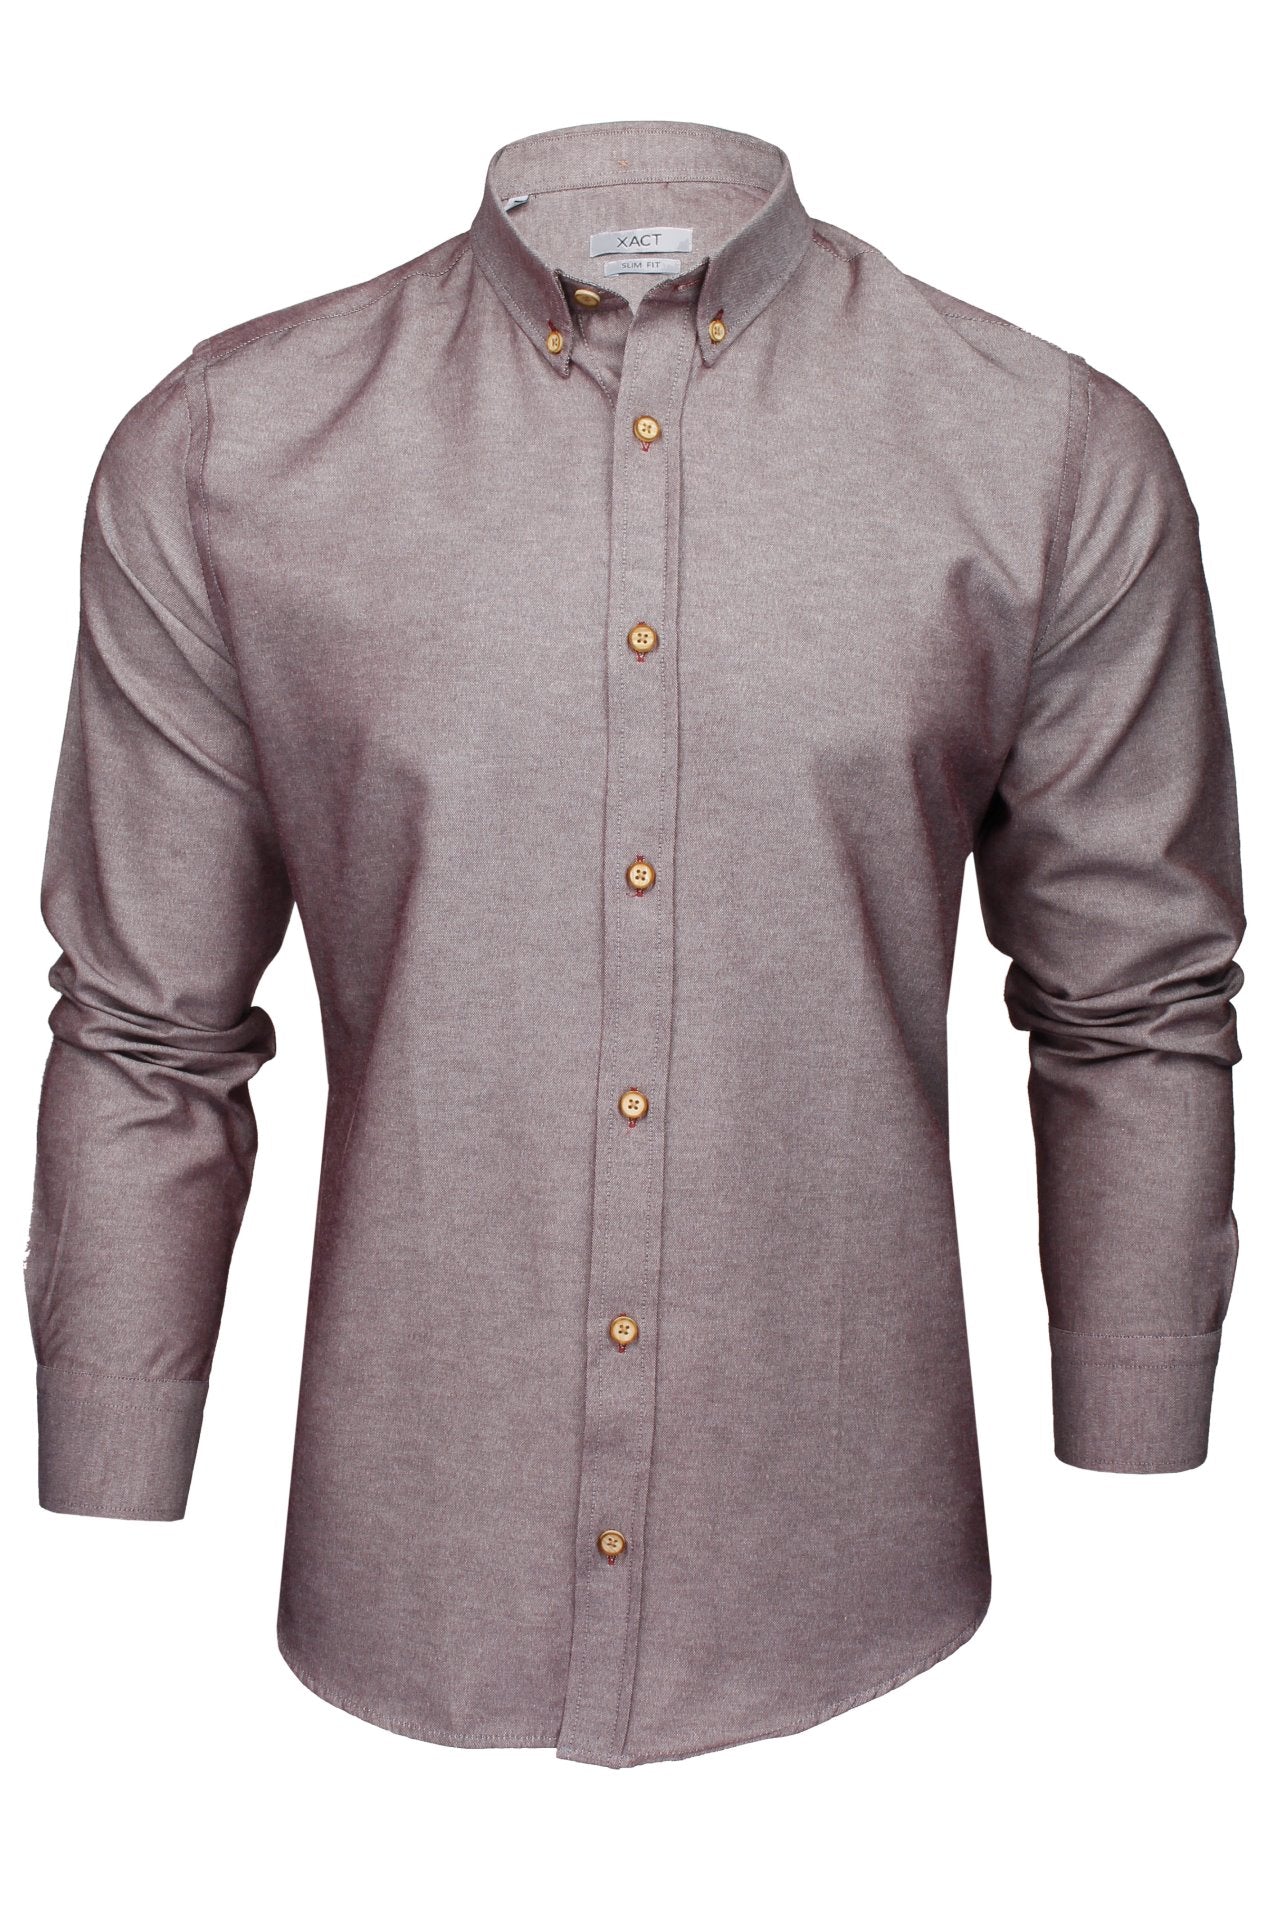 Xact Mens Chambray Denim Button Down Collar Shirt - Long Sleeved-Main Image